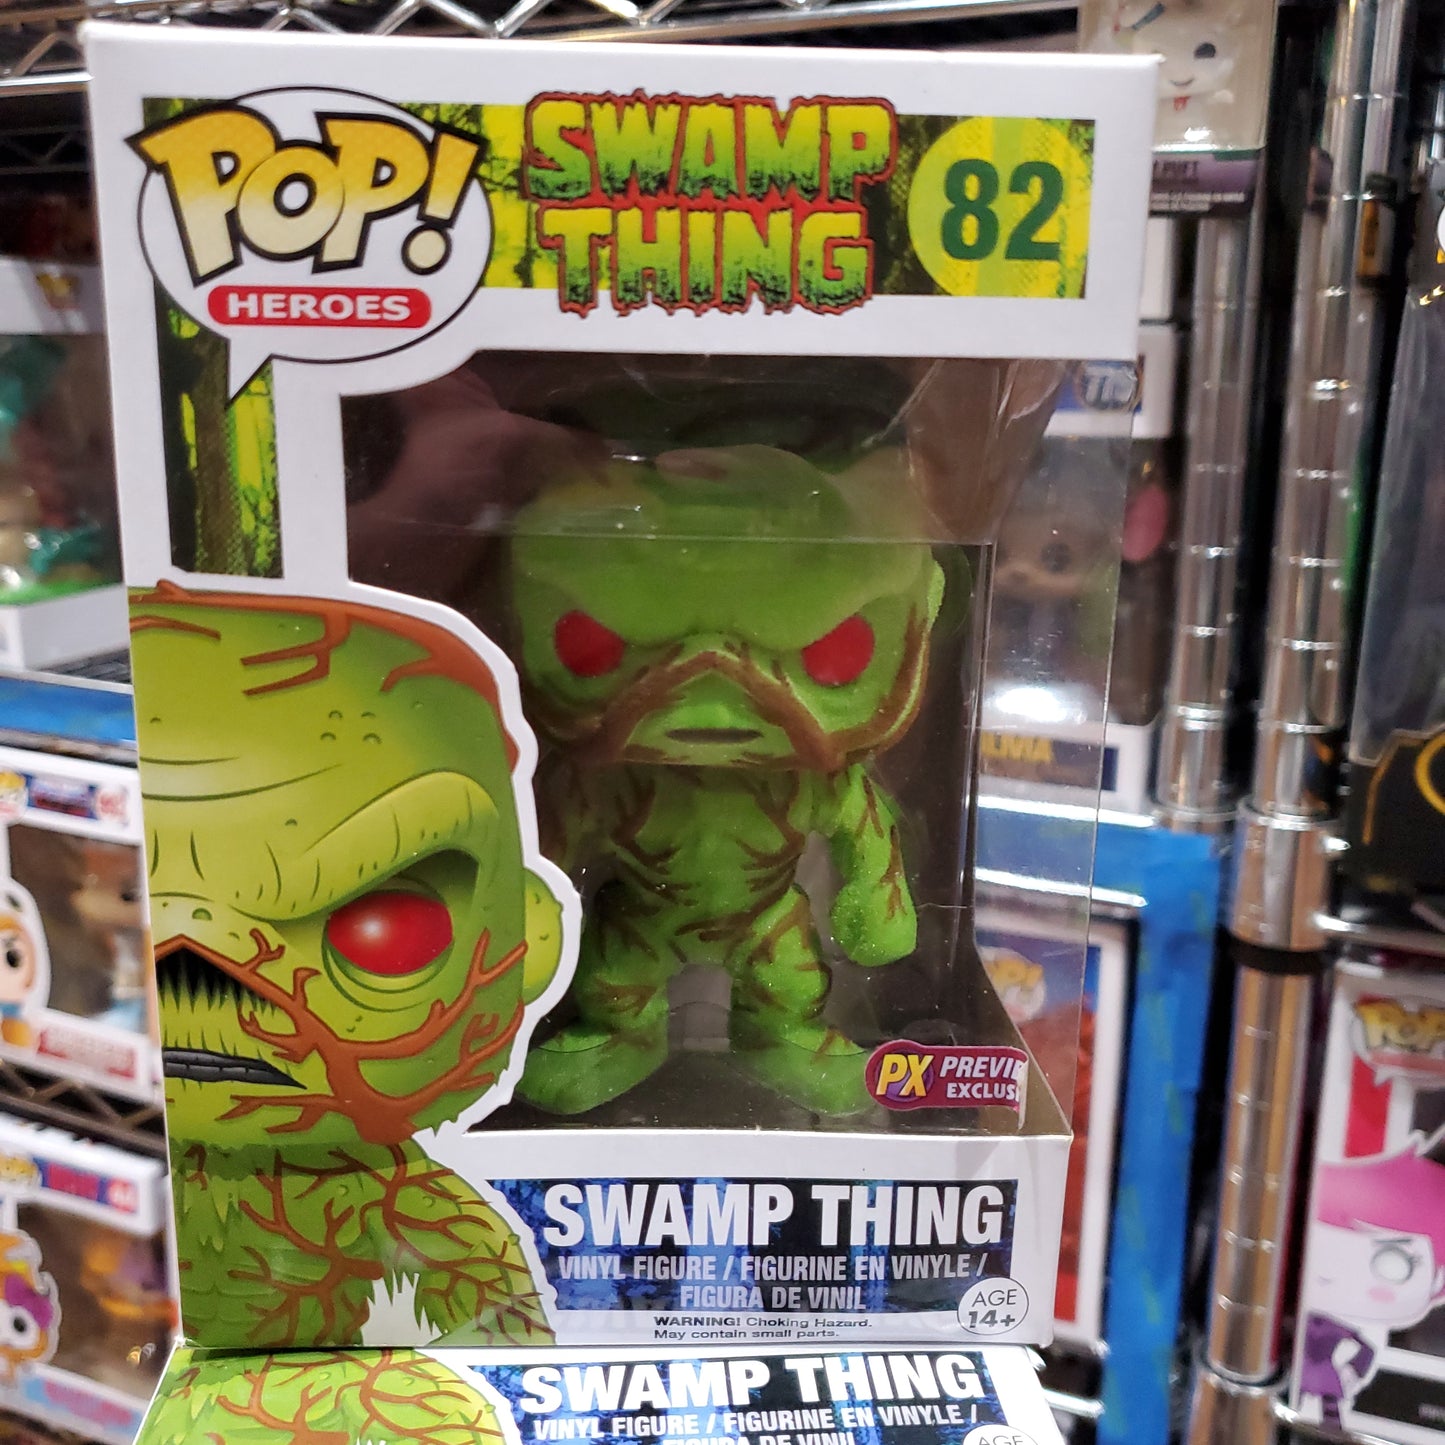 Swamp Thing #82 (Flocked) - Exclusive Funko Pop! Vinyl Figure